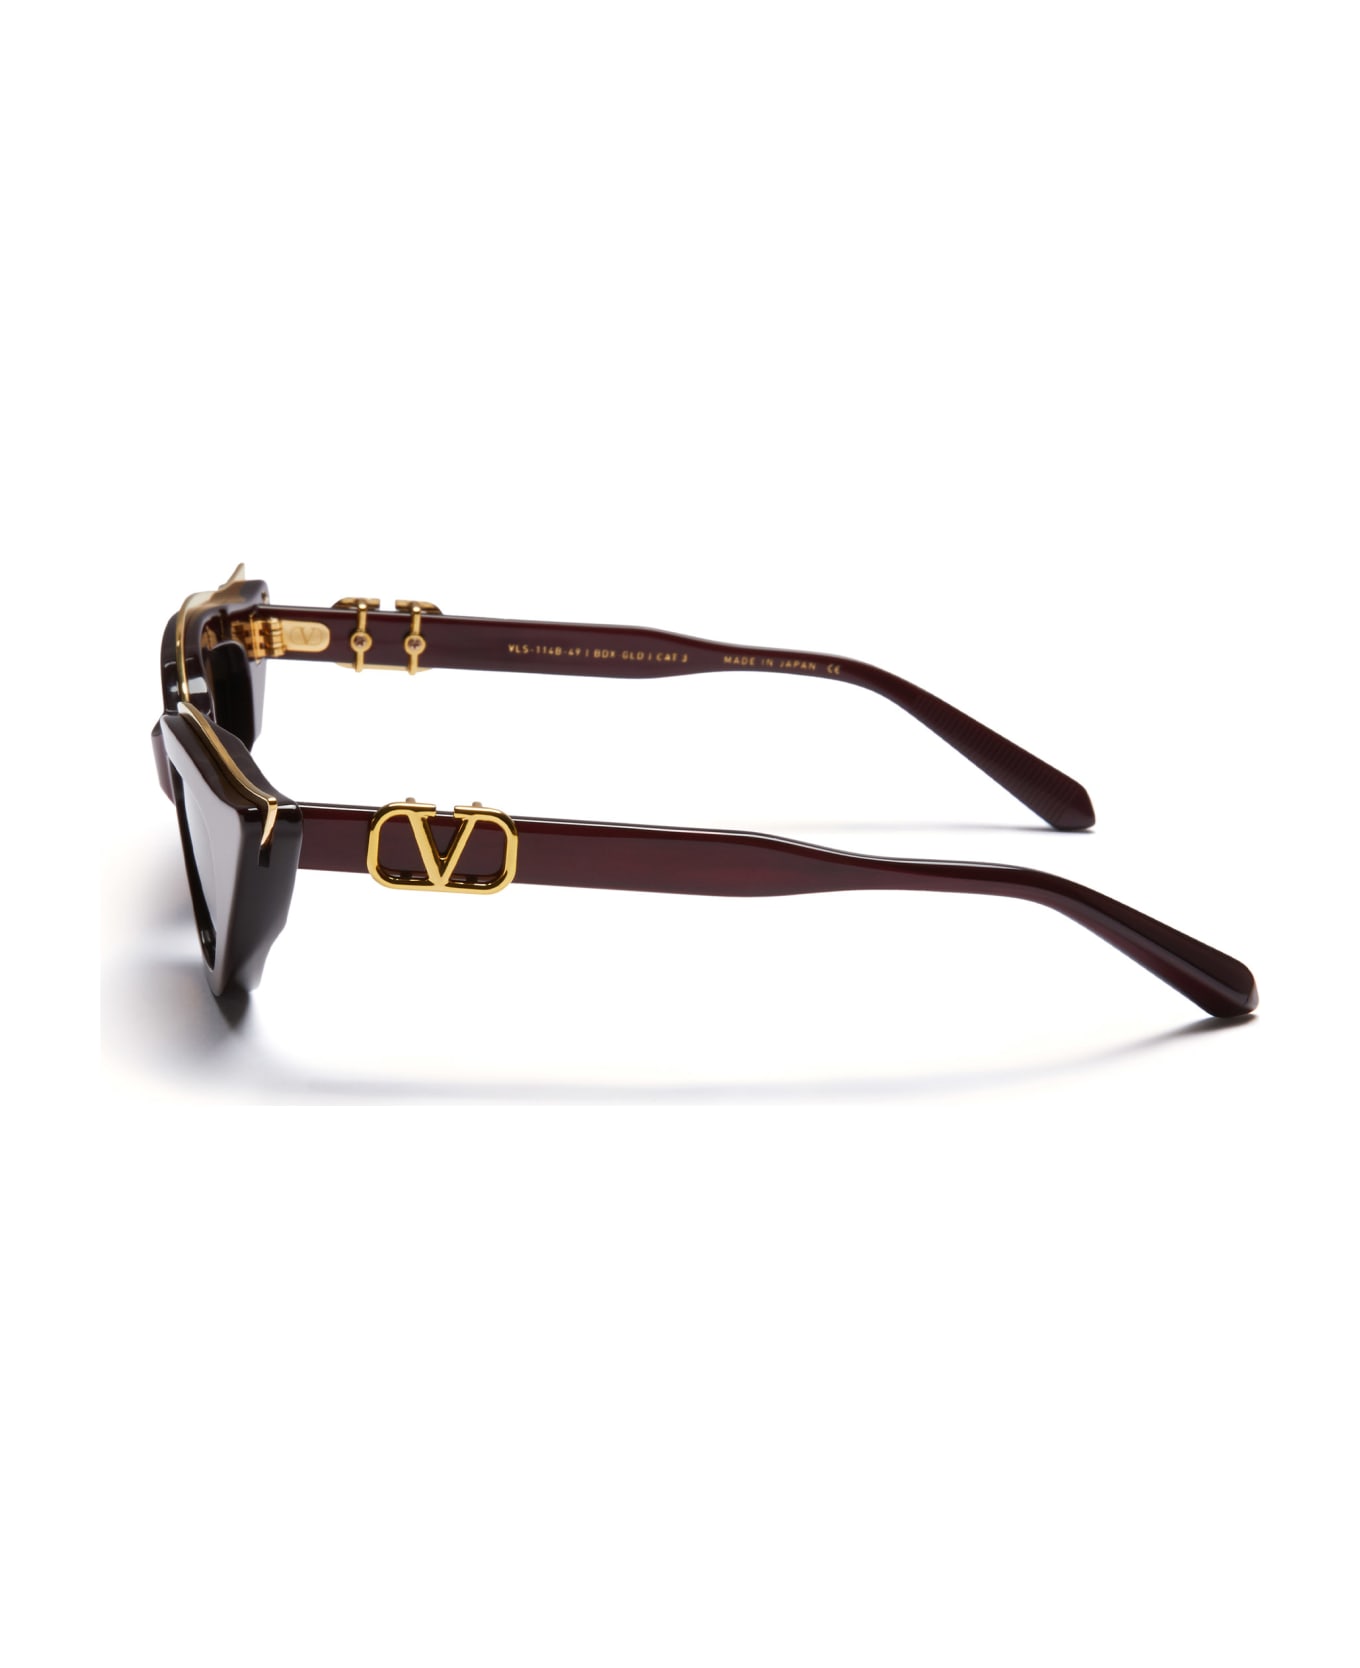 Valentino Eyewear V-goldcut Ii - Burgundy / Yellow Gold Sunglasses - burgundy